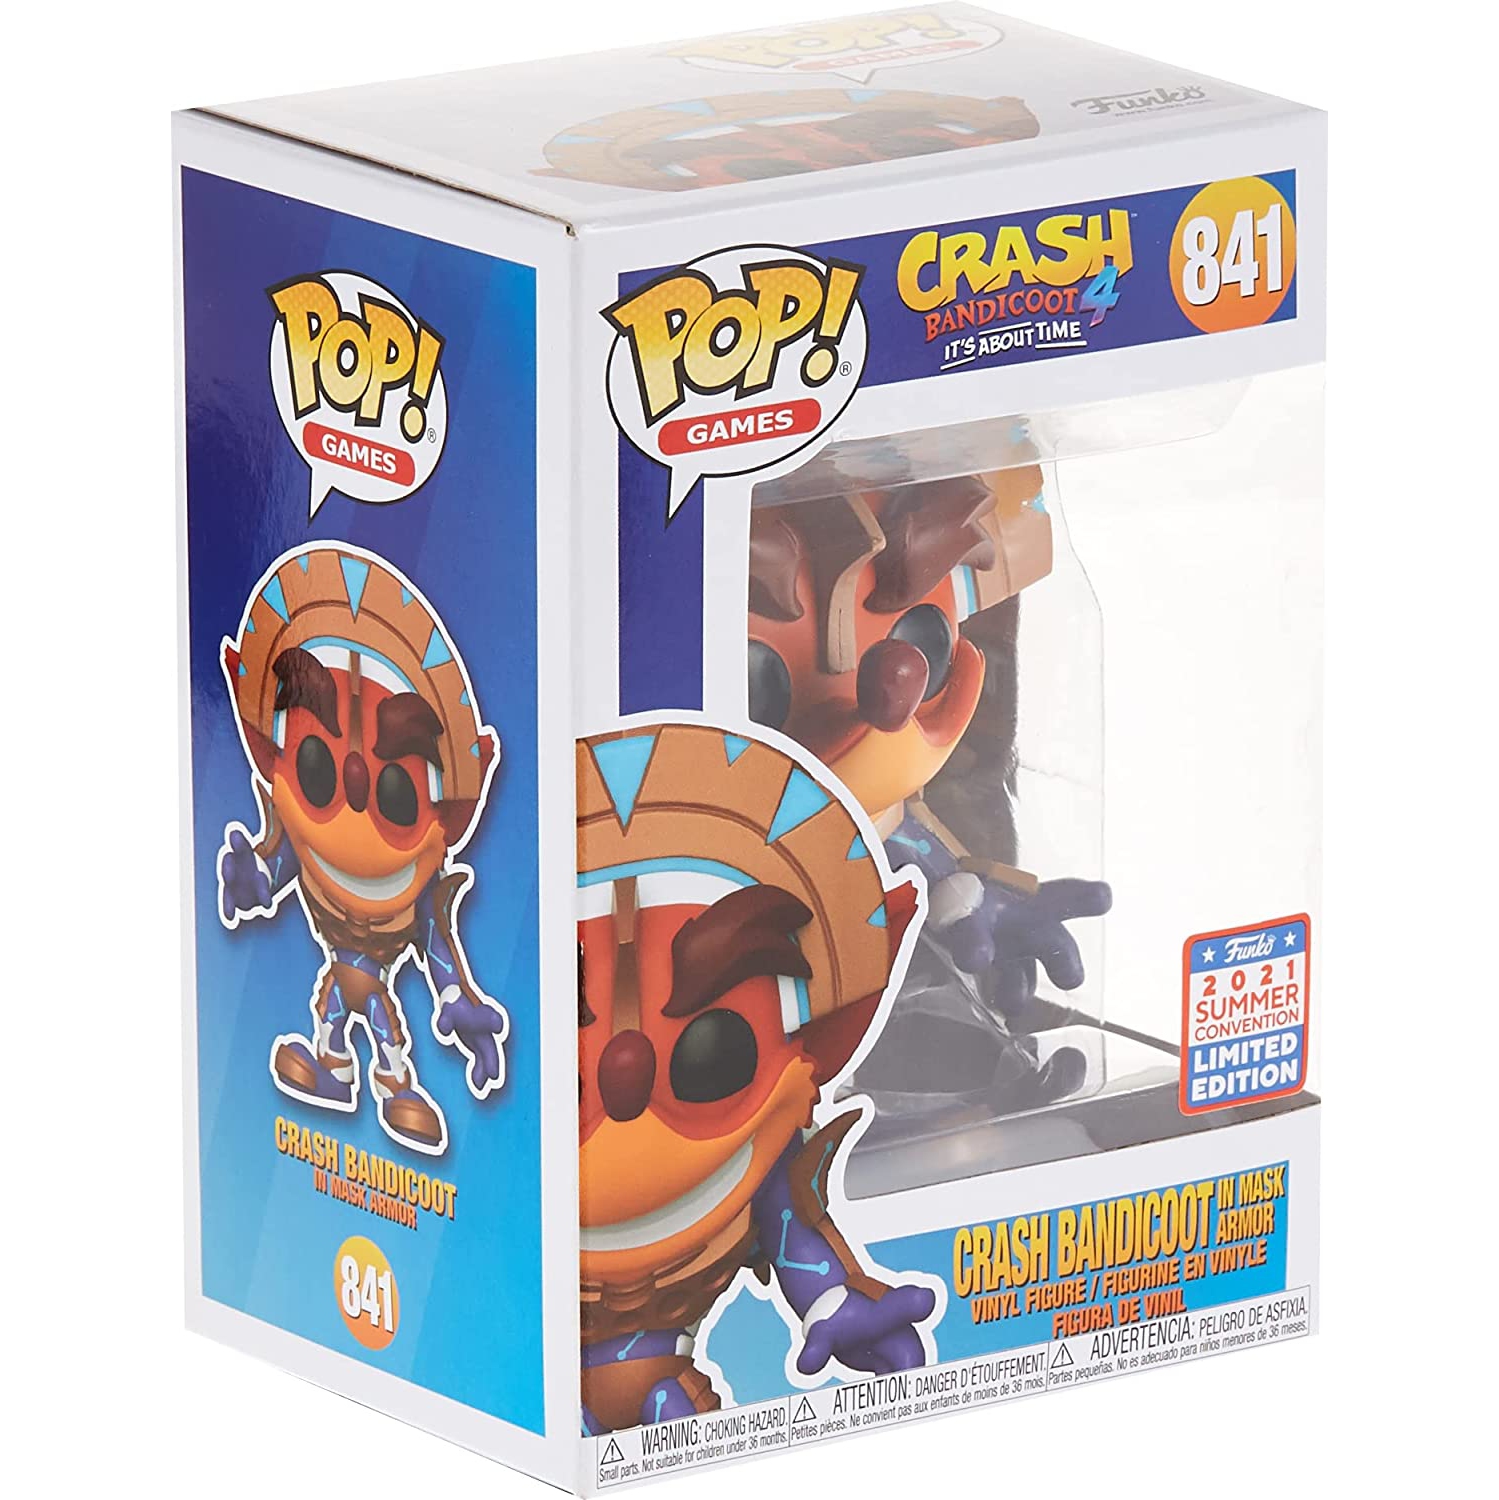 Funko Pop! Games Crash Bandicoot 4 Vinyl Figure Crash Bandicoot in Mask Armor #841 2021 Summer Convention Exclusive